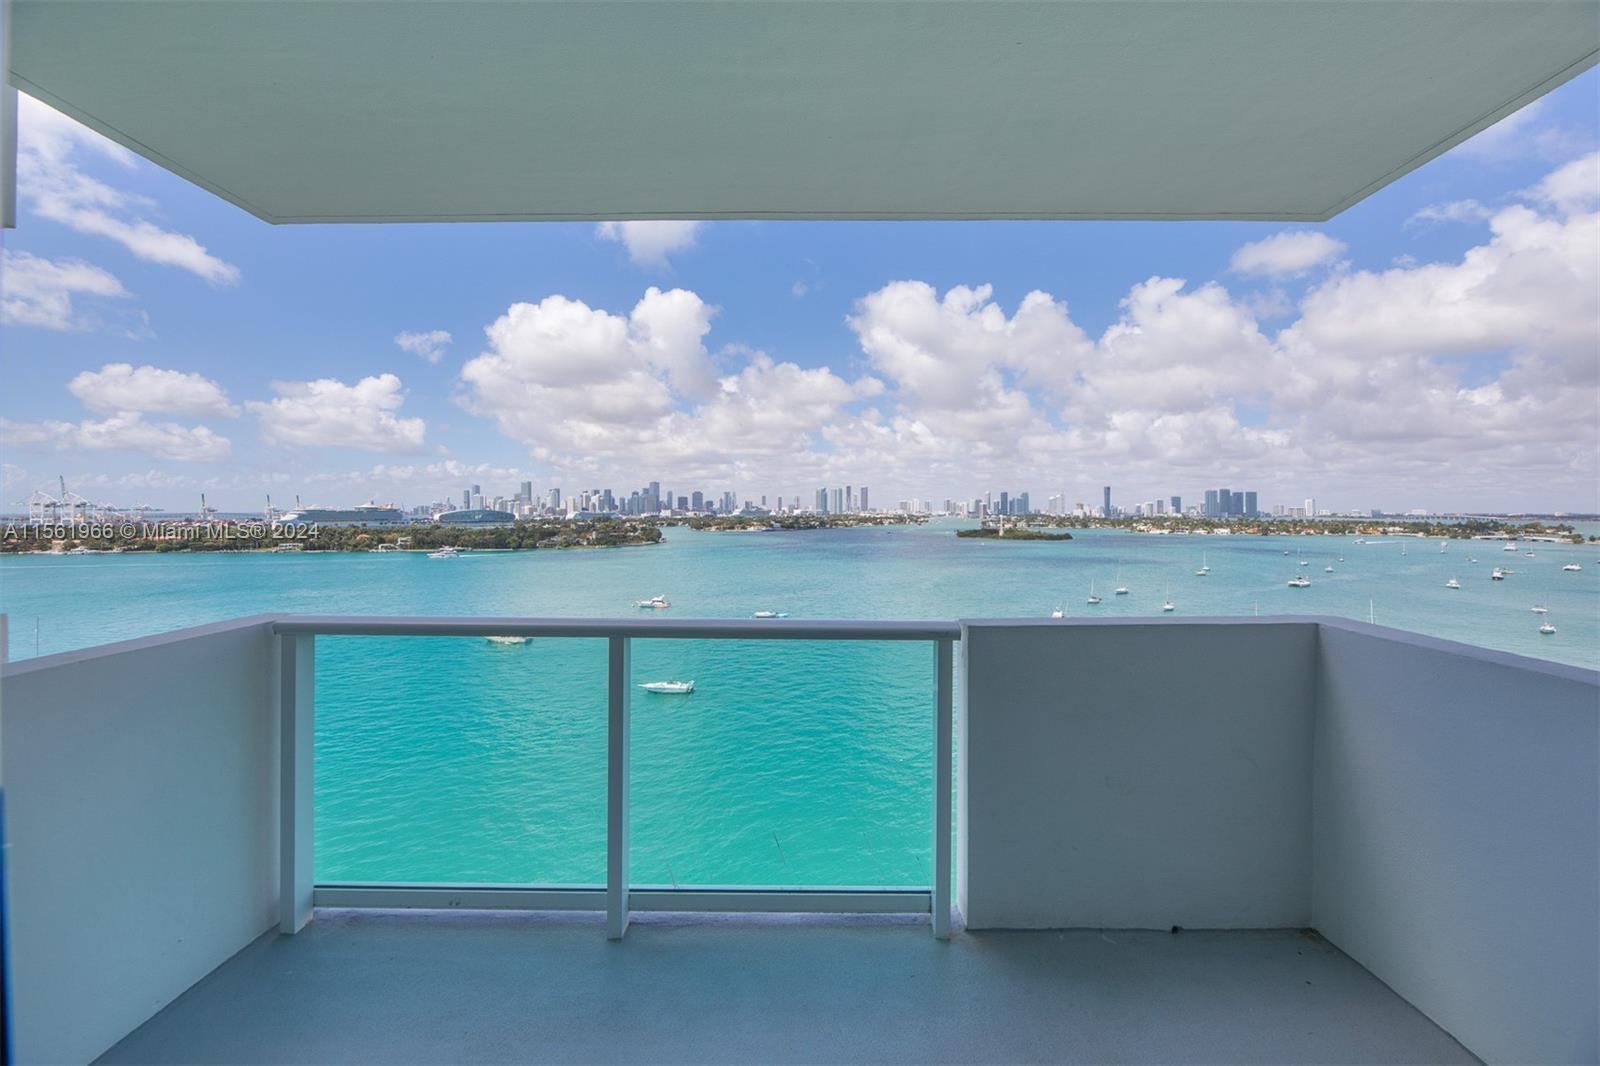 Rental Property at 1200 West Ave 1425, Miami Beach, Miami-Dade County, Florida - Bedrooms: 2 
Bathrooms: 2  - $4,600 MO.